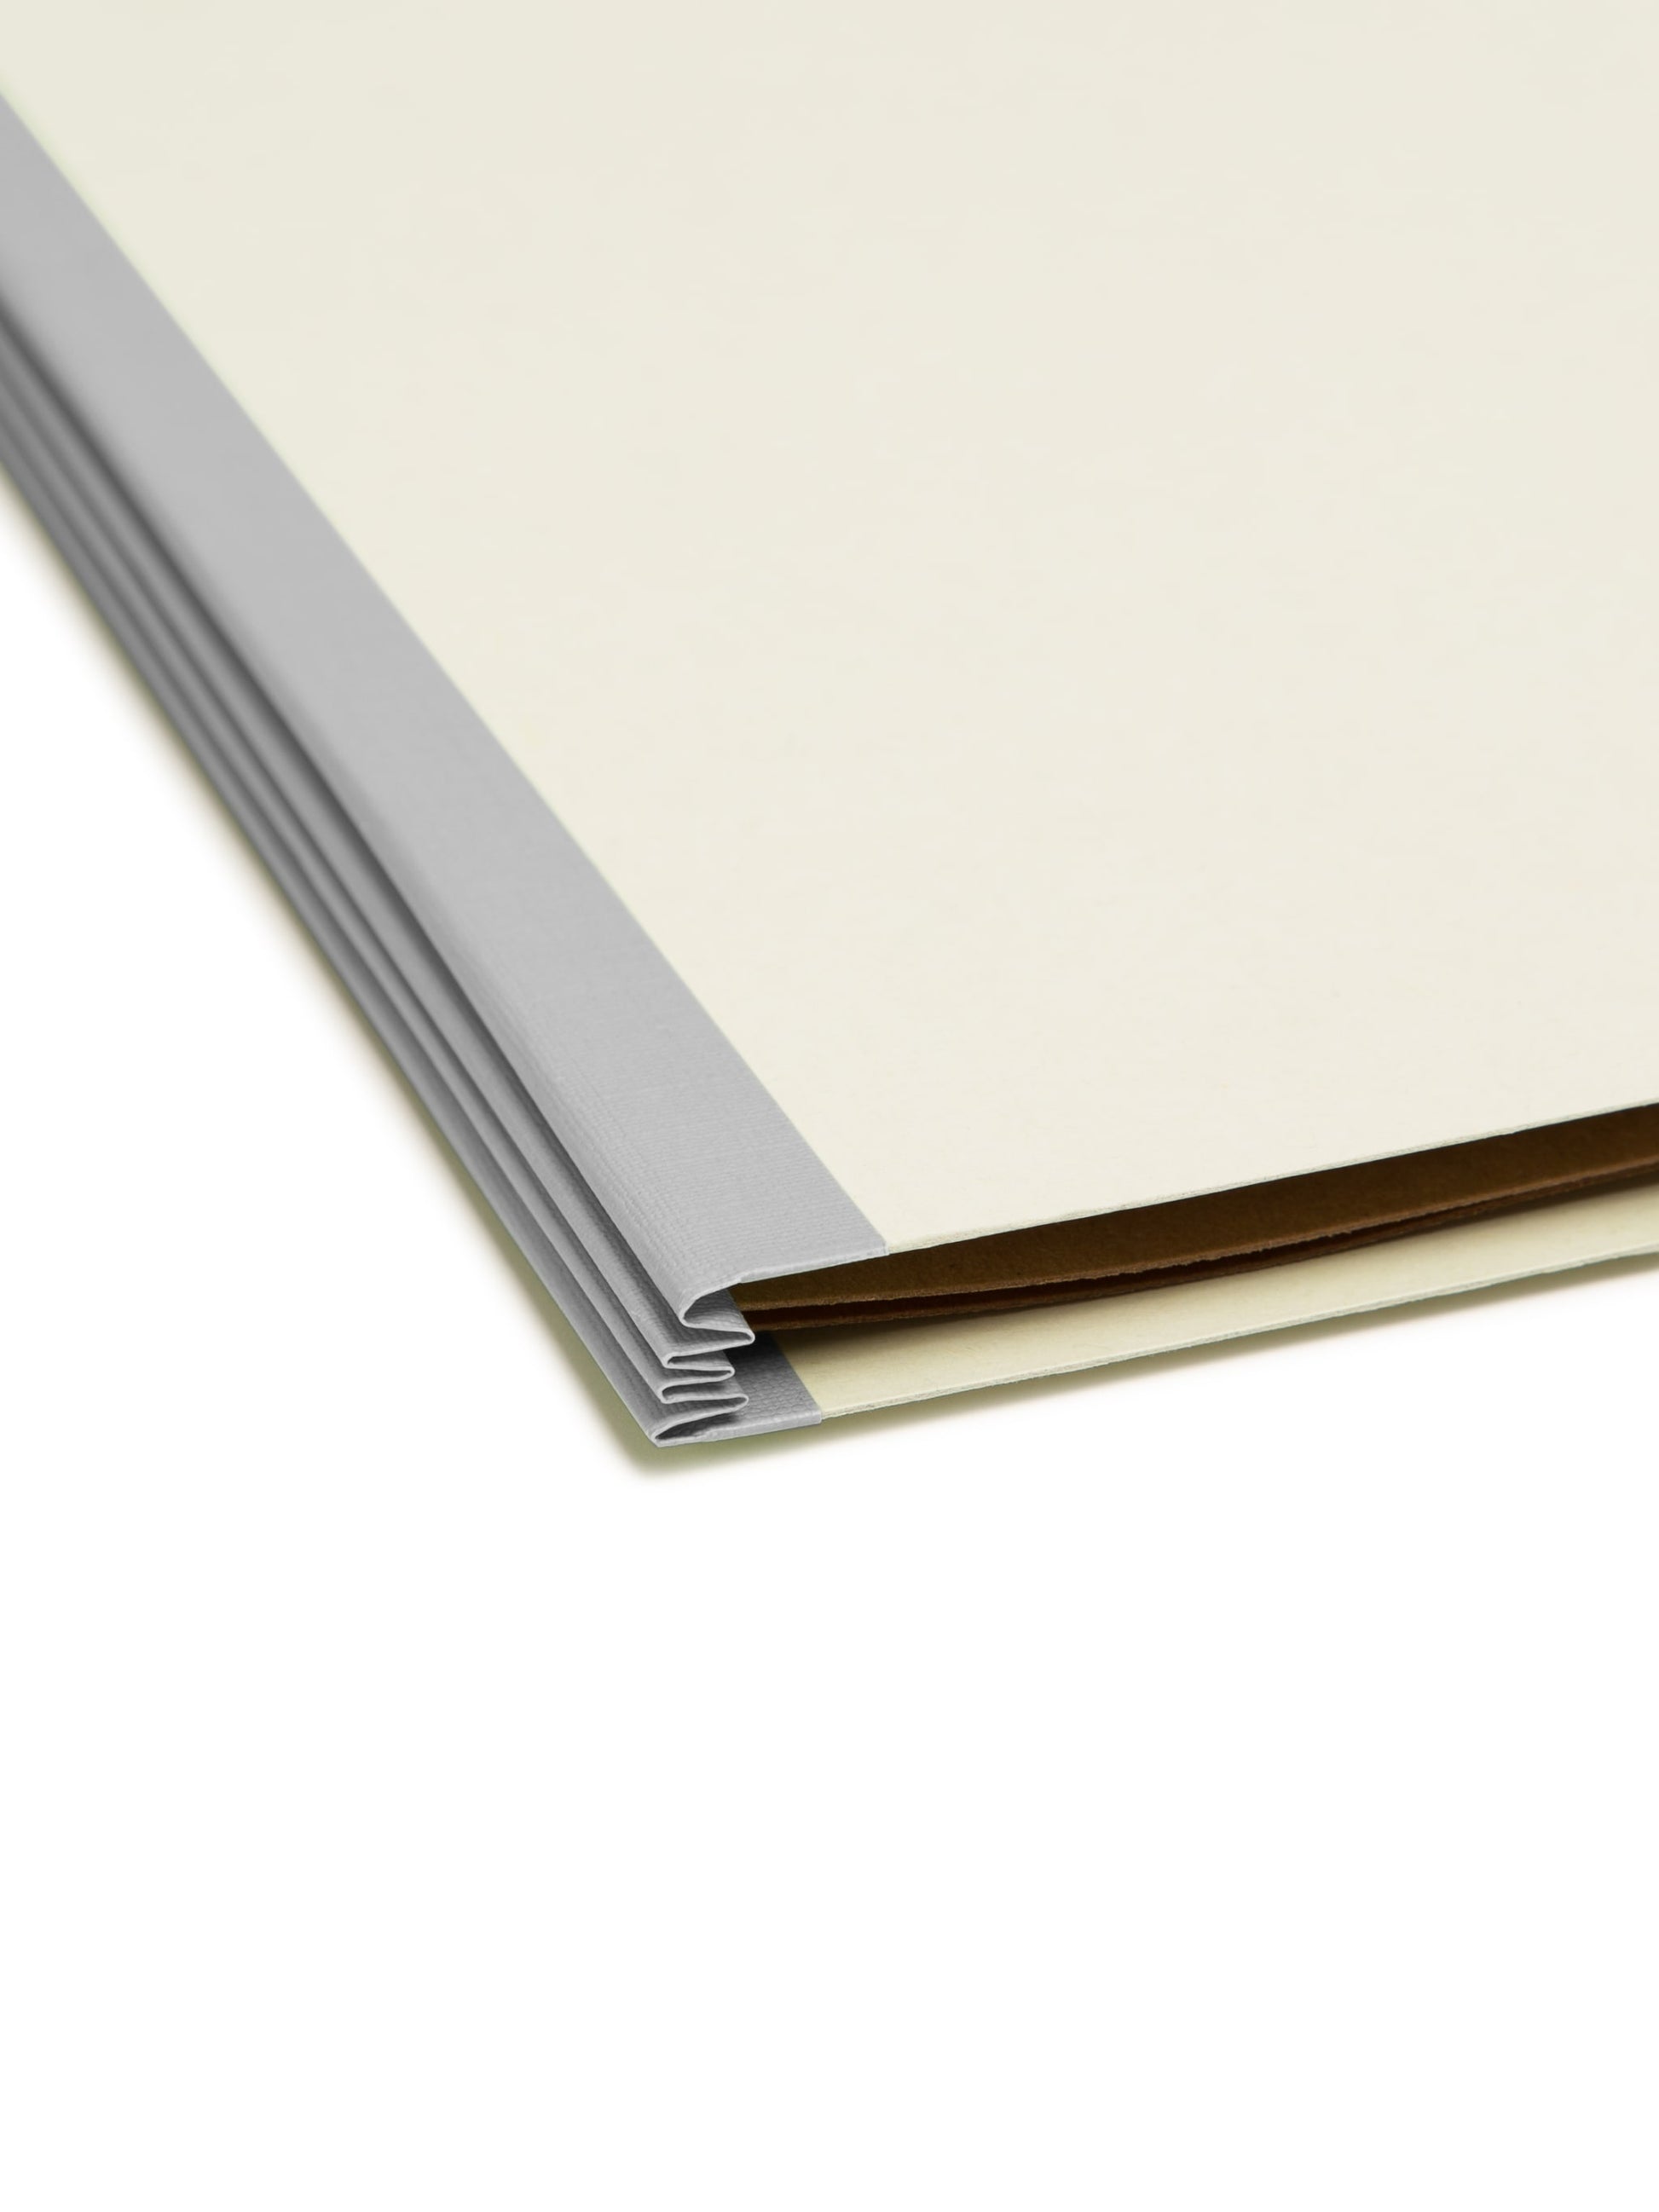 SafeSHIELD® Pressboard Classification File Folders, 1 Divider, 2 inch Expansion, Gray/Green Color, Legal Size, Set of 0, 30086486187764